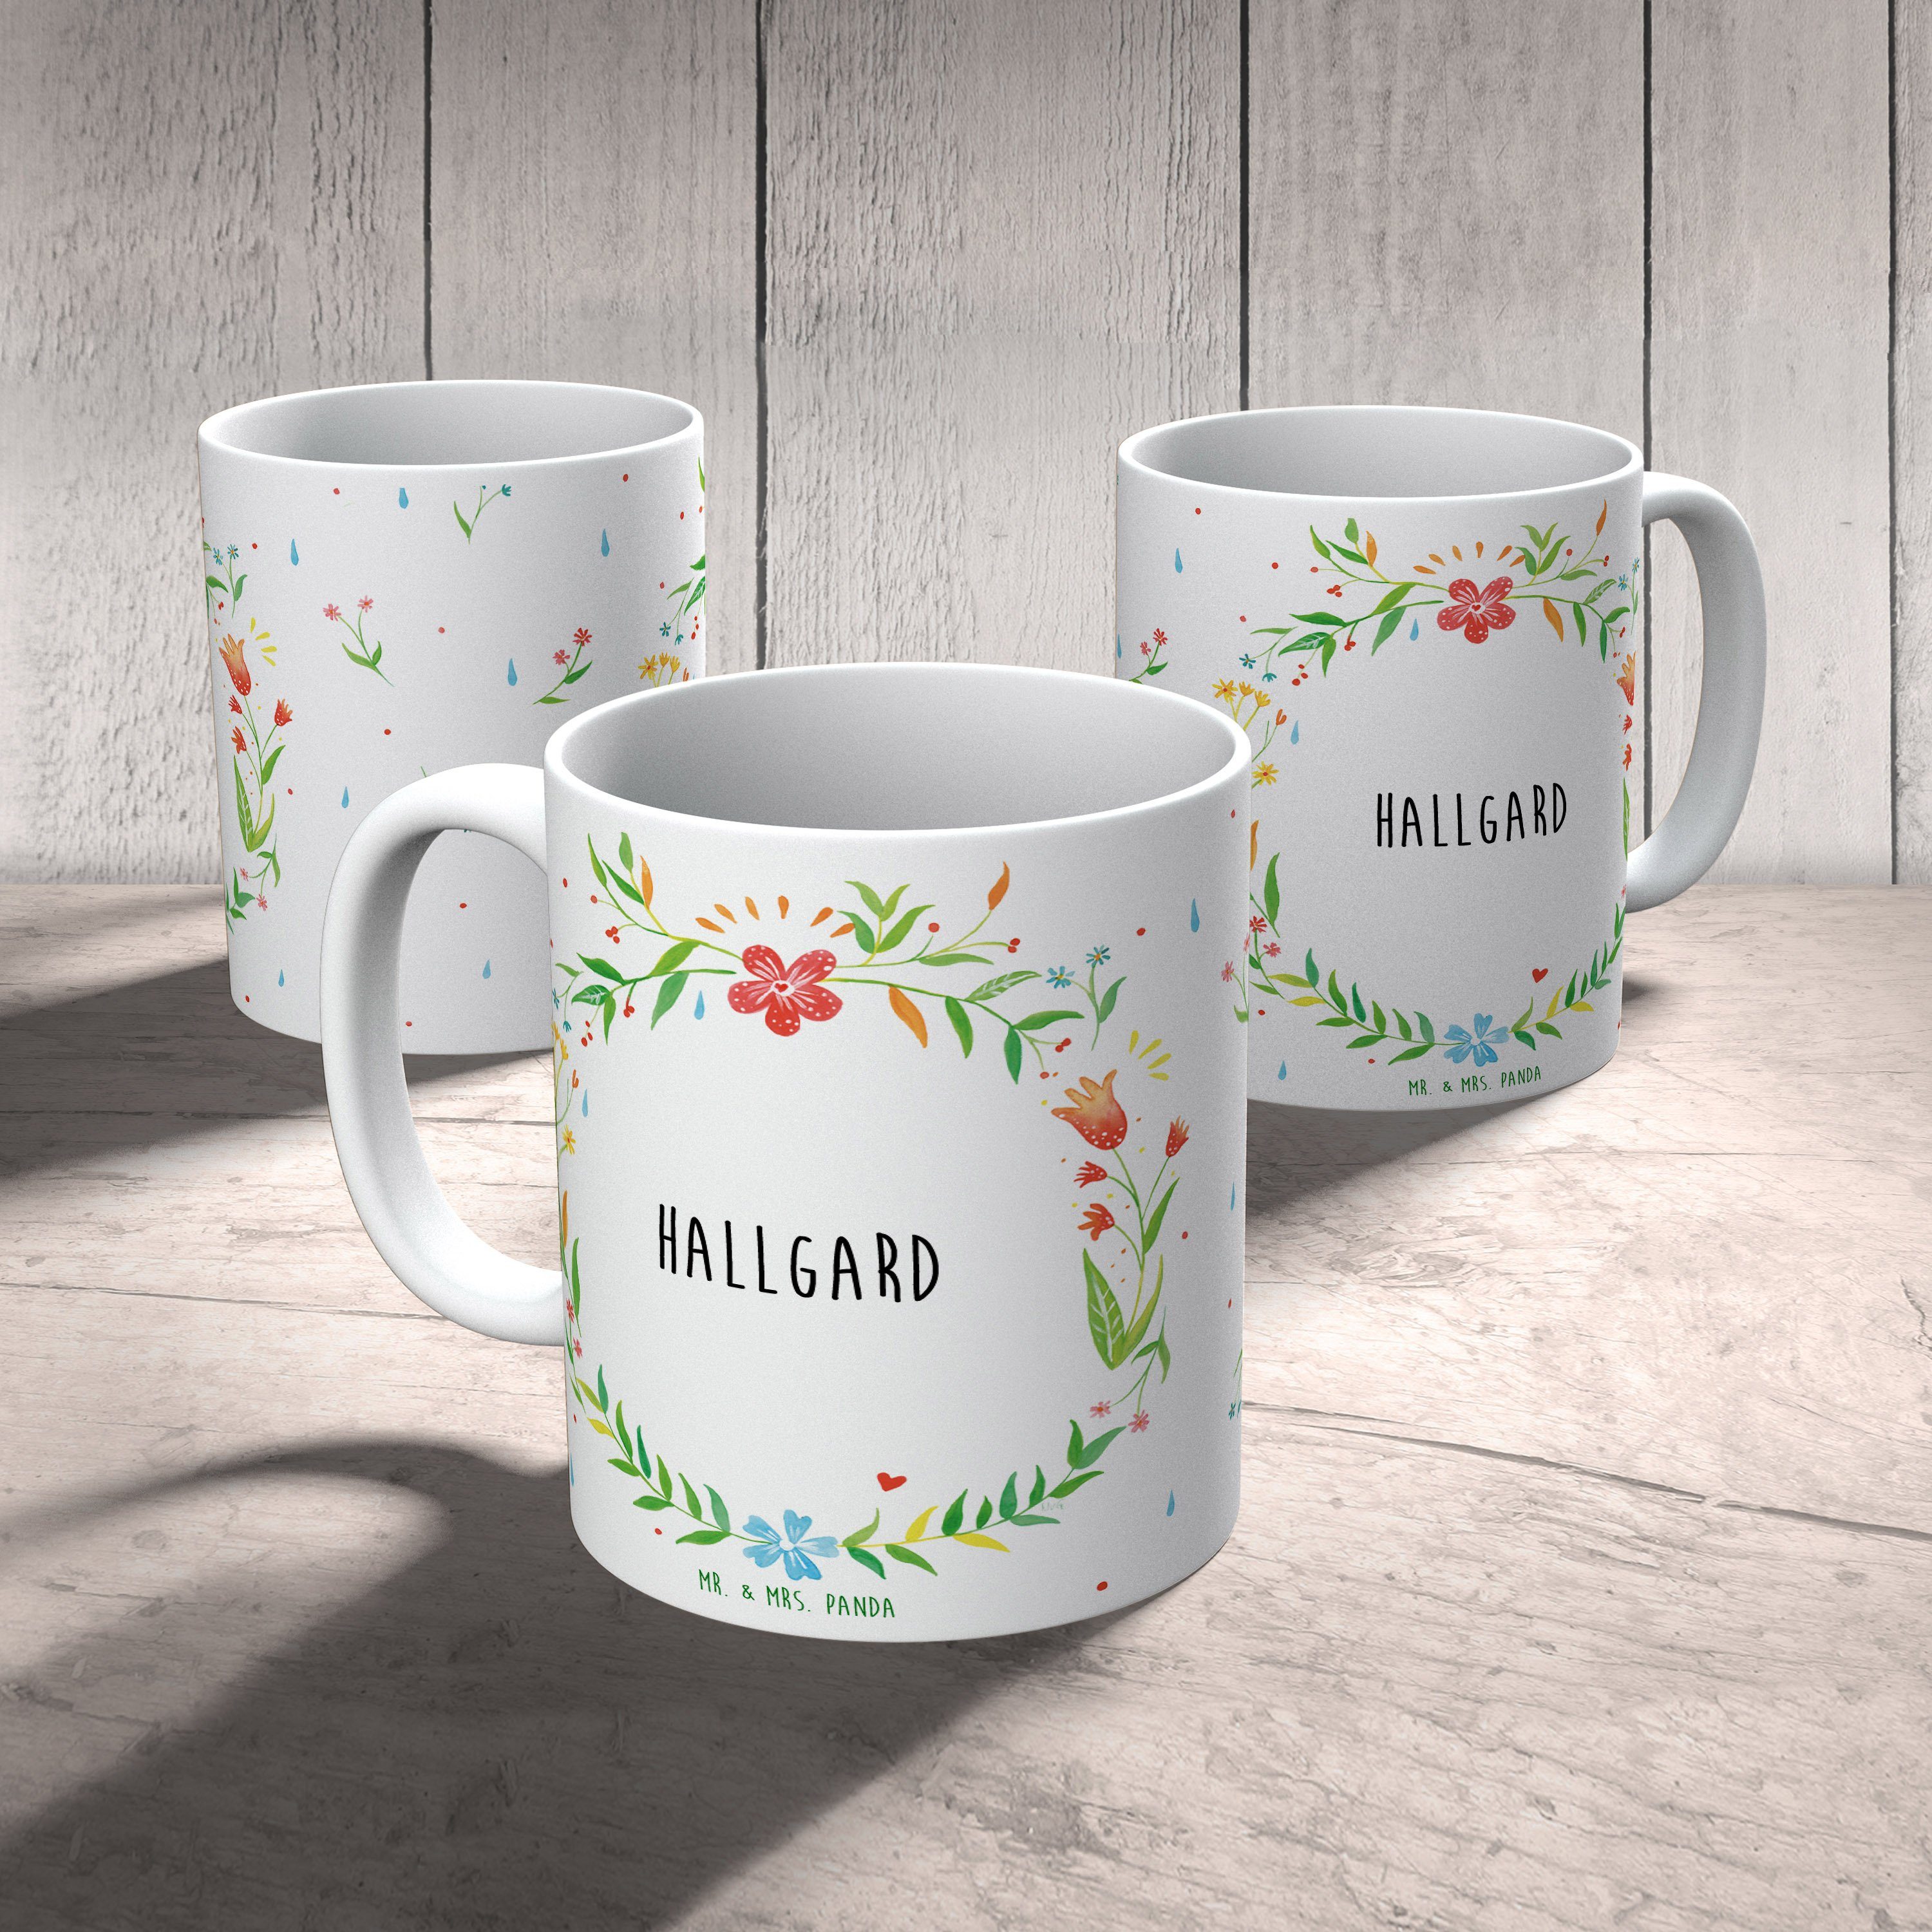 Mo, Büro Hallgard Geschenk, Tasse Tasse, Kaffeetasse, Tasse Mr. Sprüche, Tasse & - Keramik Mrs. Panda